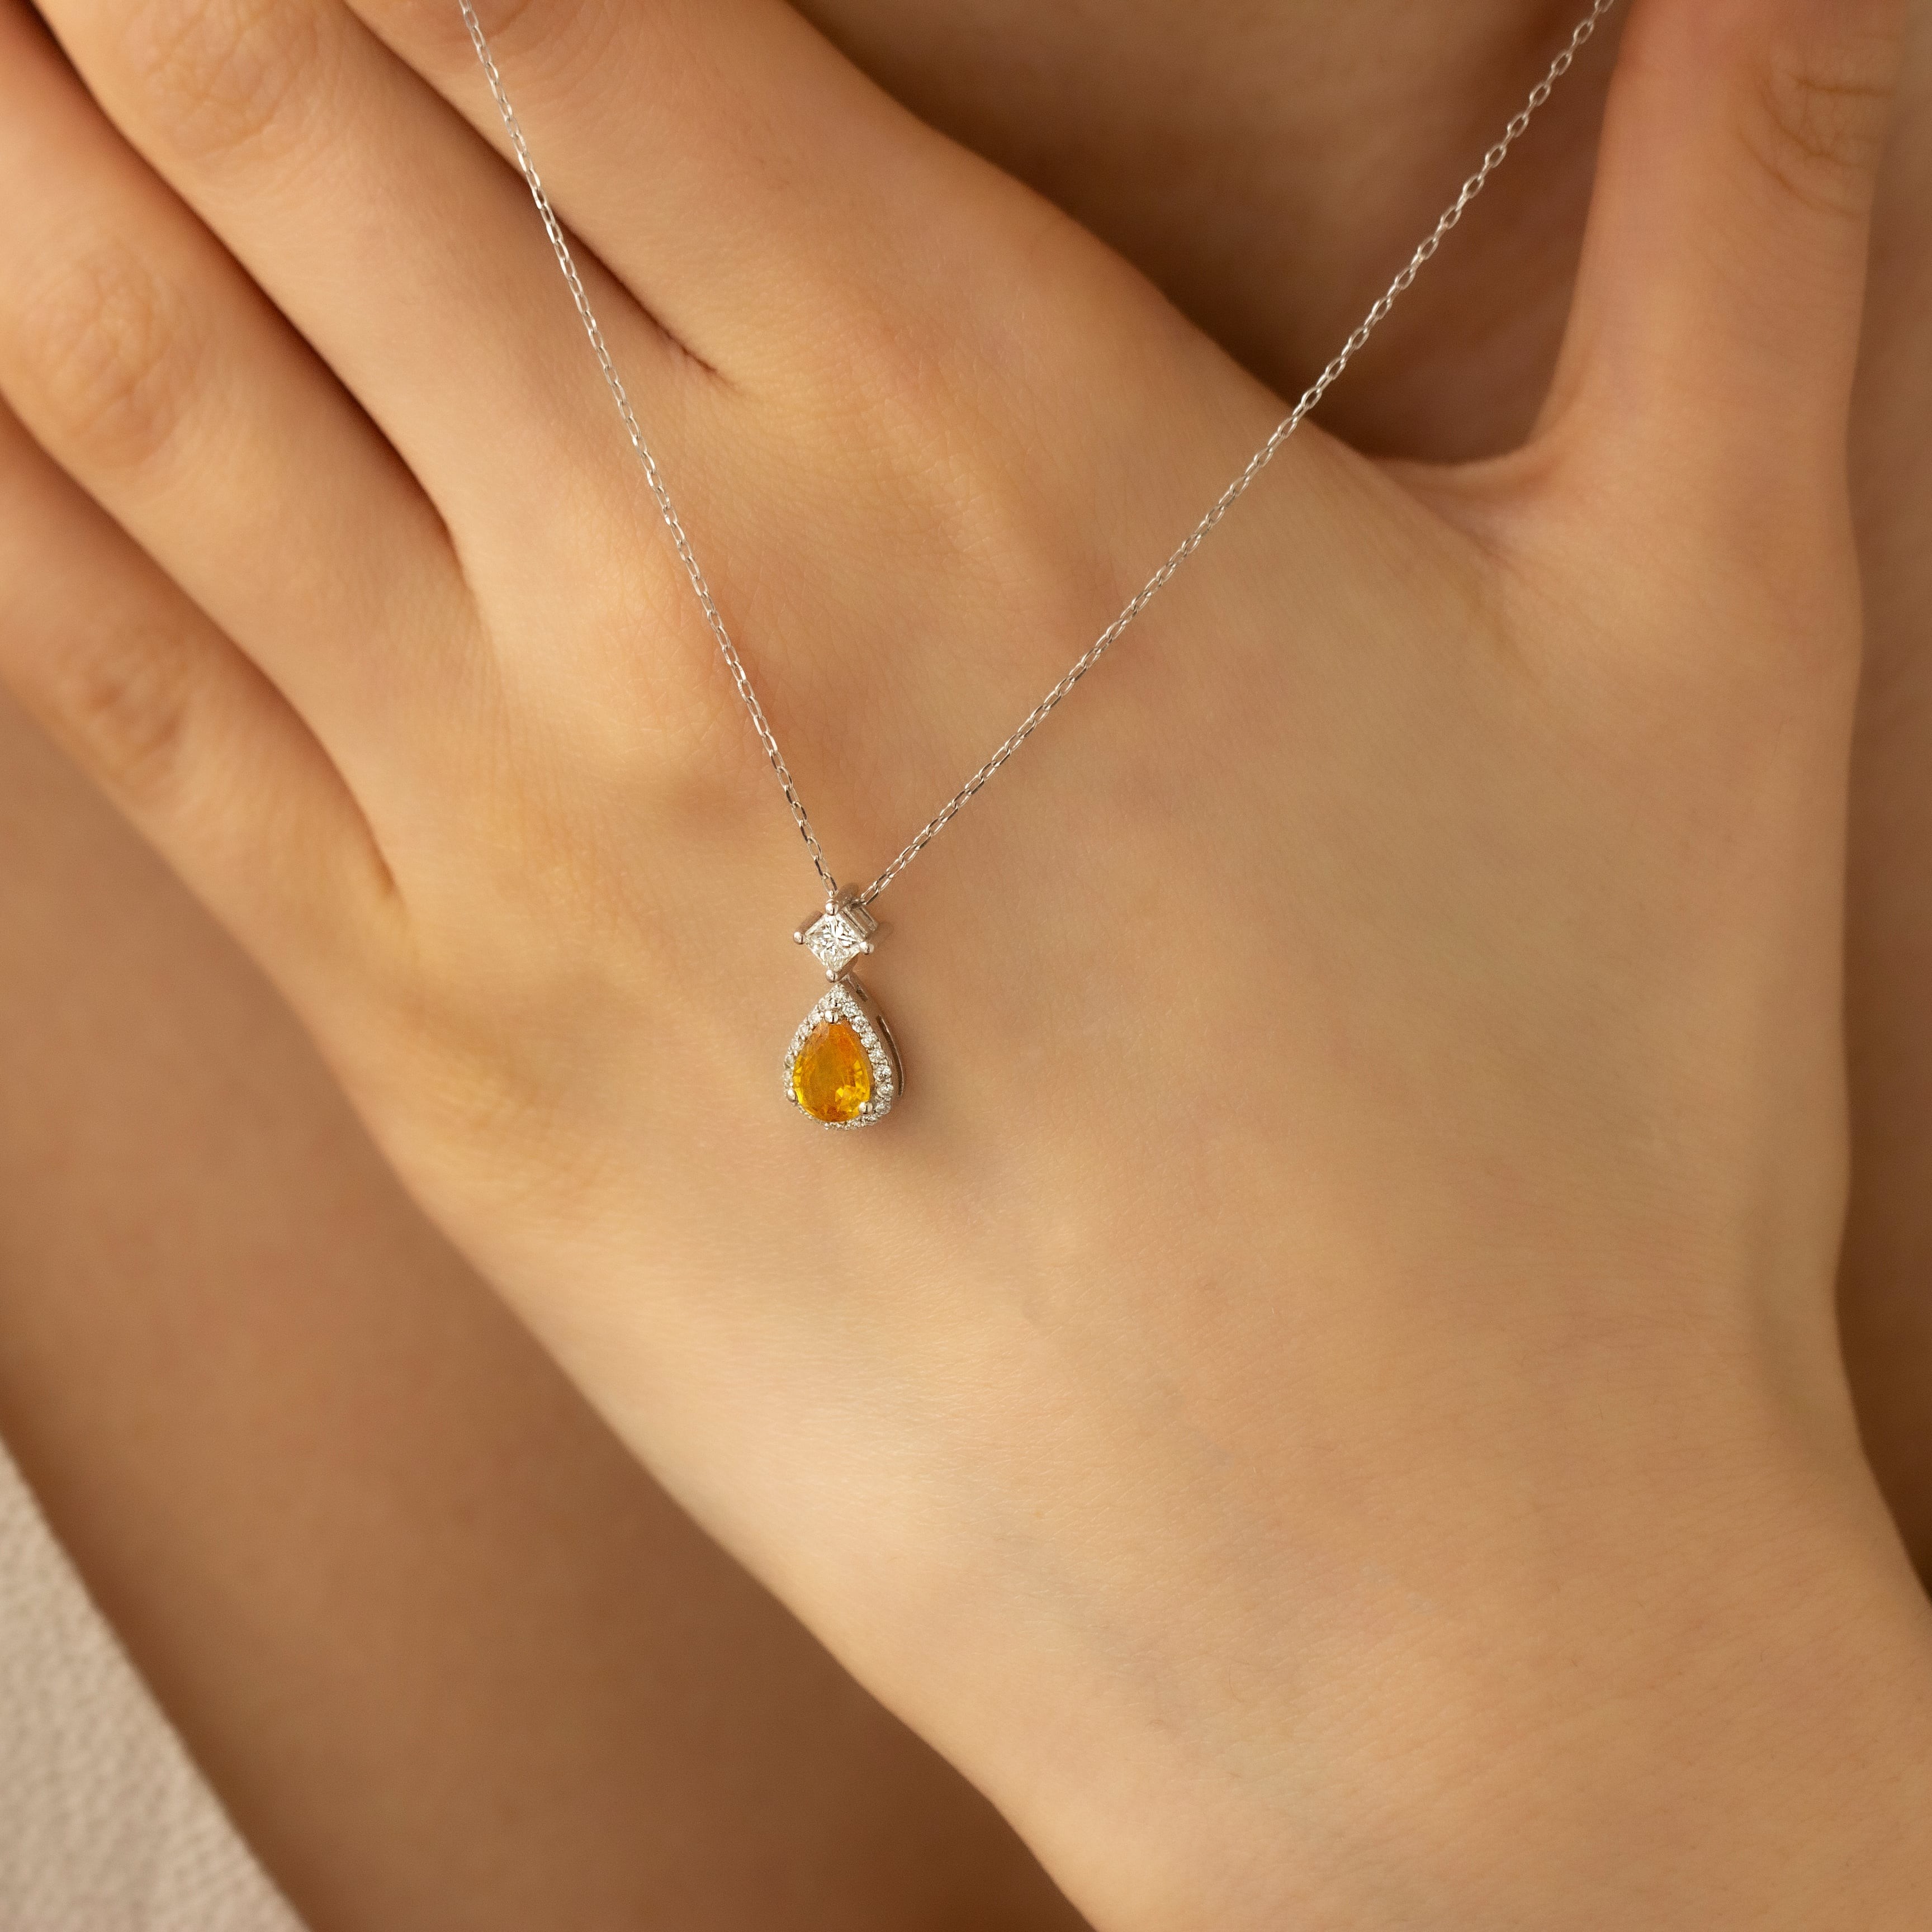 Design Diamond Necklace with Gold Citrine Stone